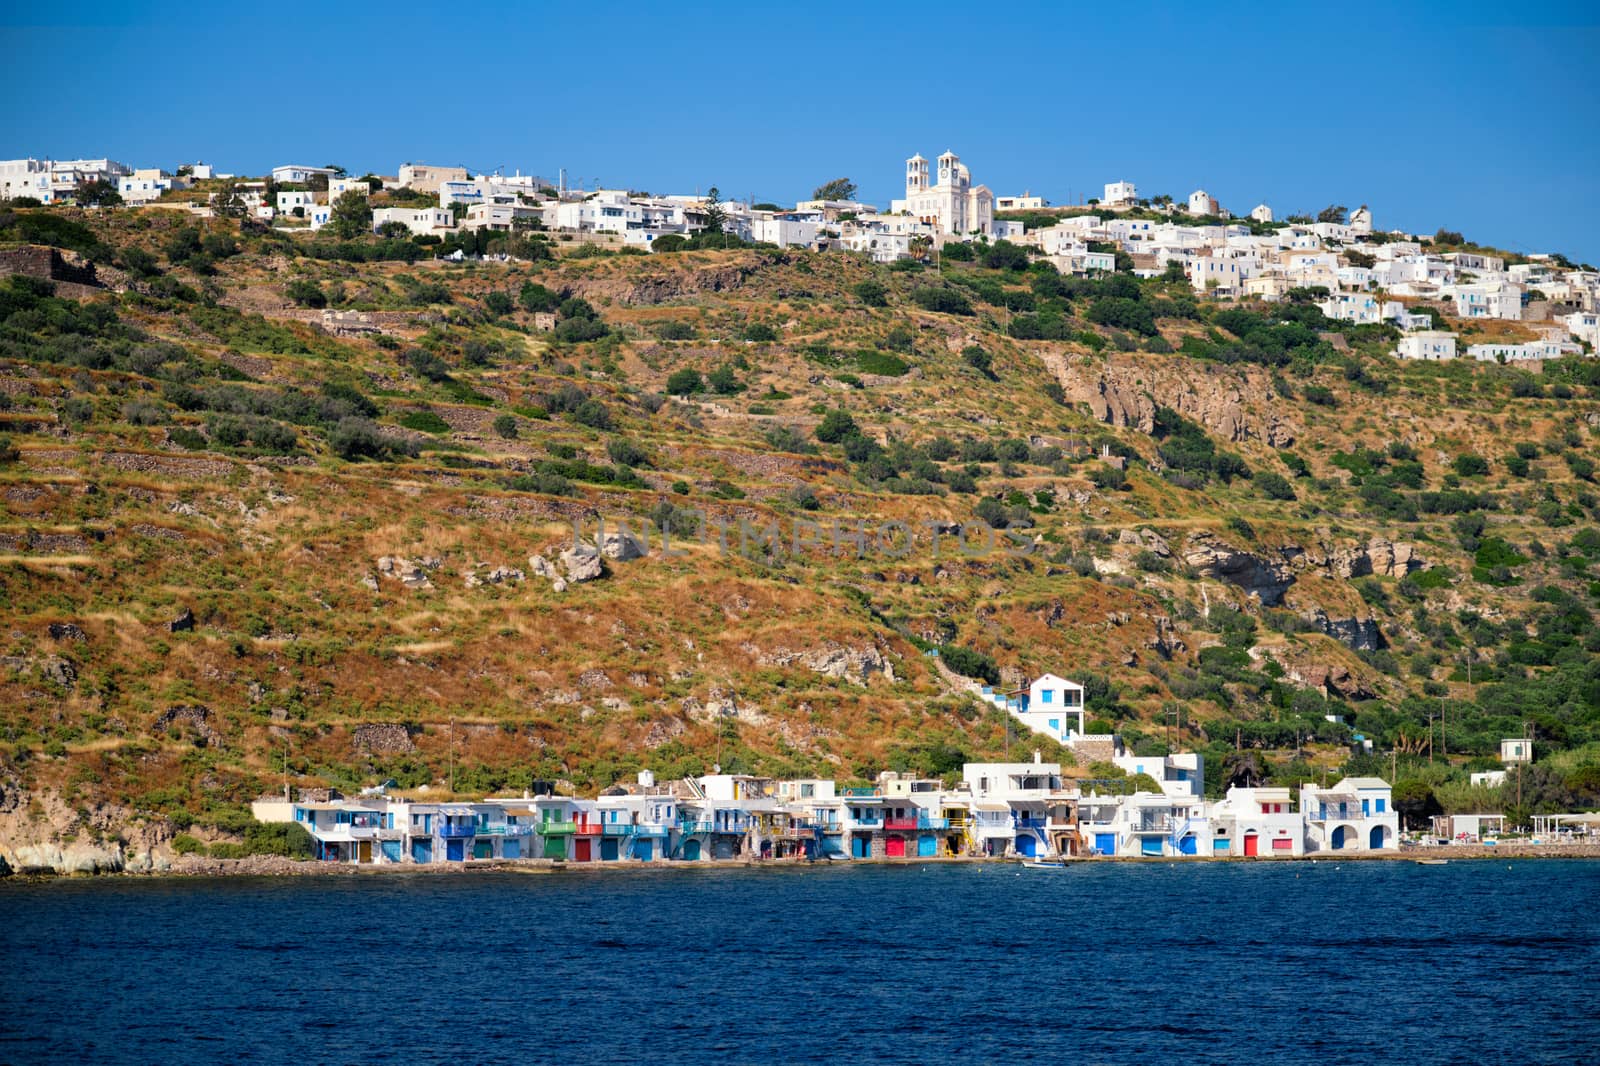 Klima and Plaka villages on Milos island, Greece by dimol